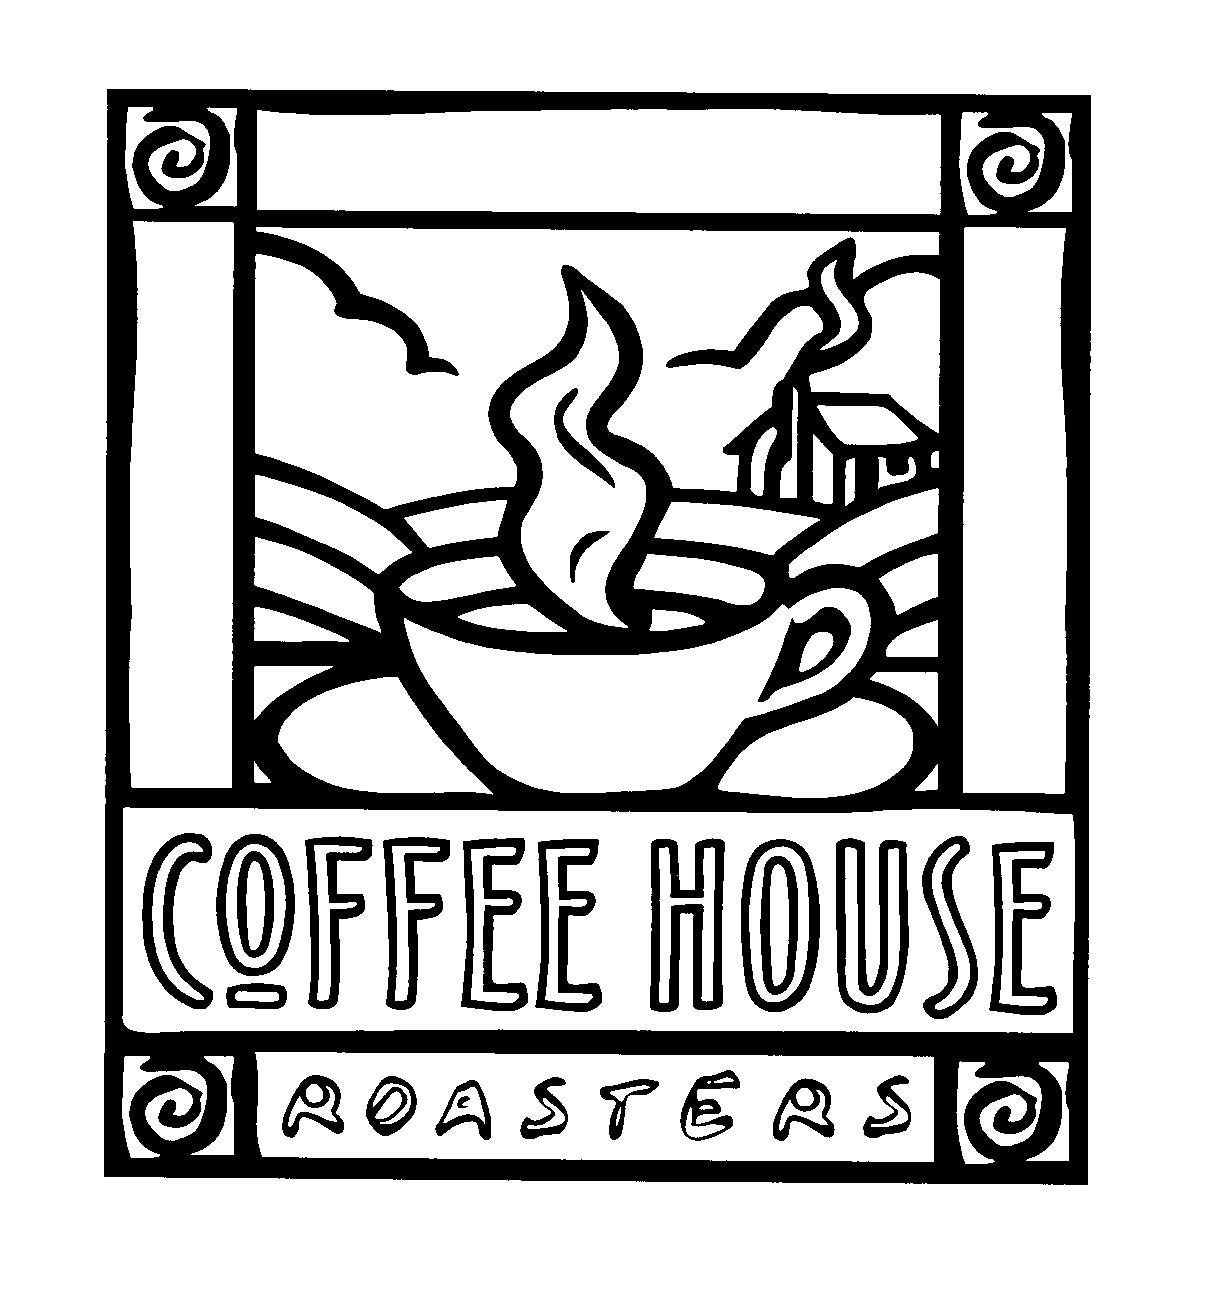  COFFEE HOUSE ROASTERS